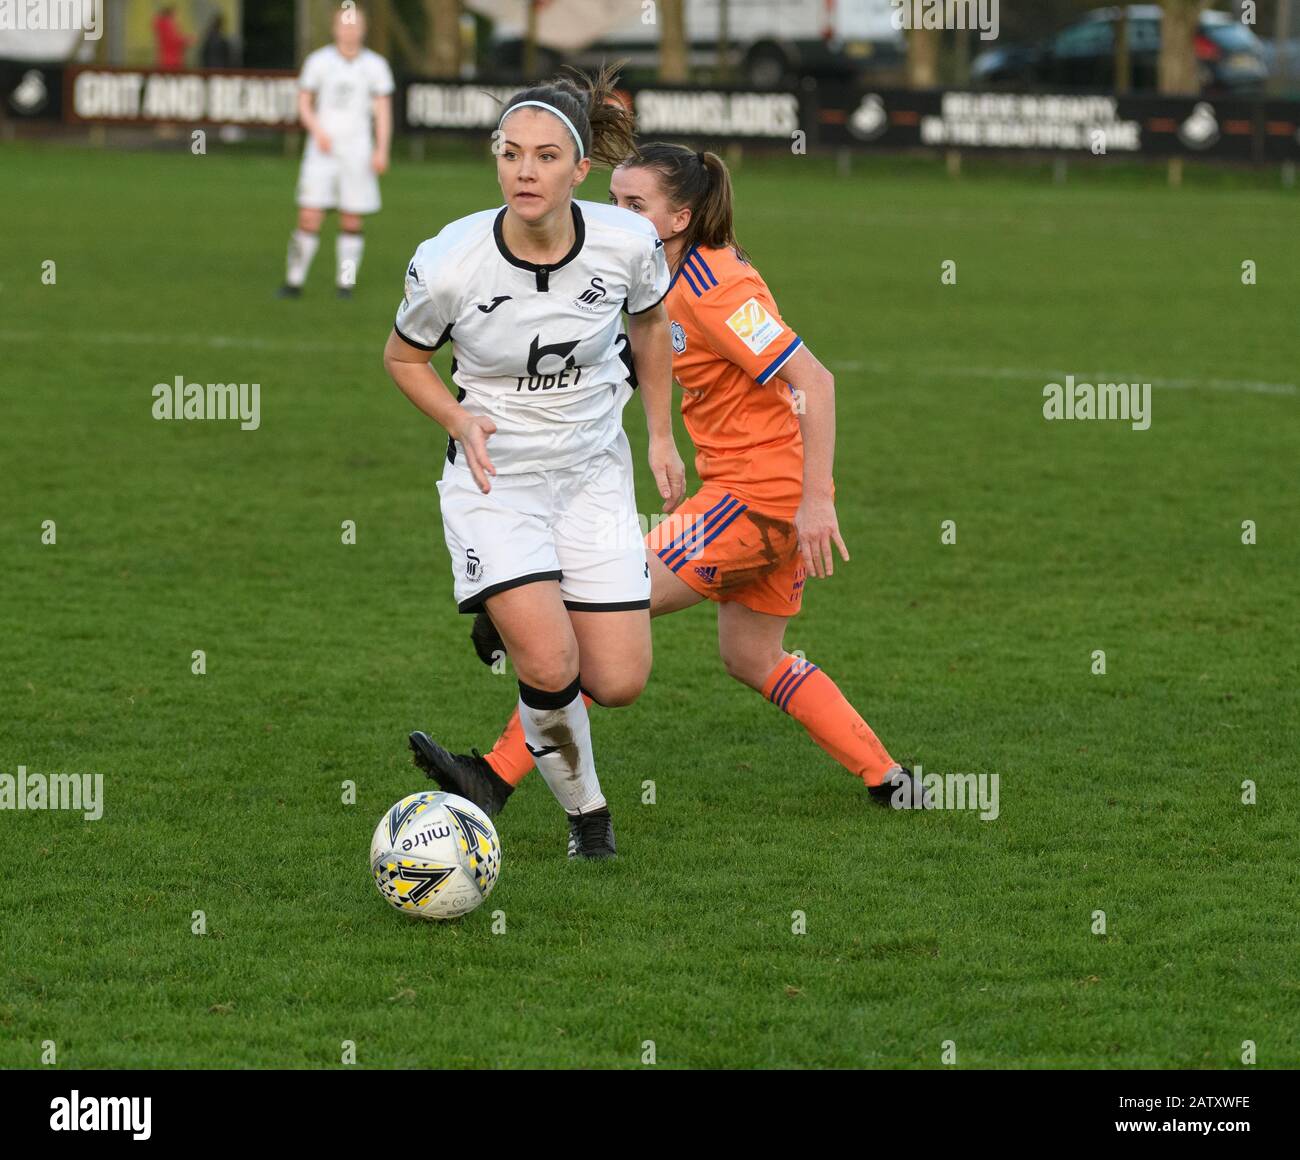 Emma Beynon on the ball for Swansea city womens football team Stock Photo